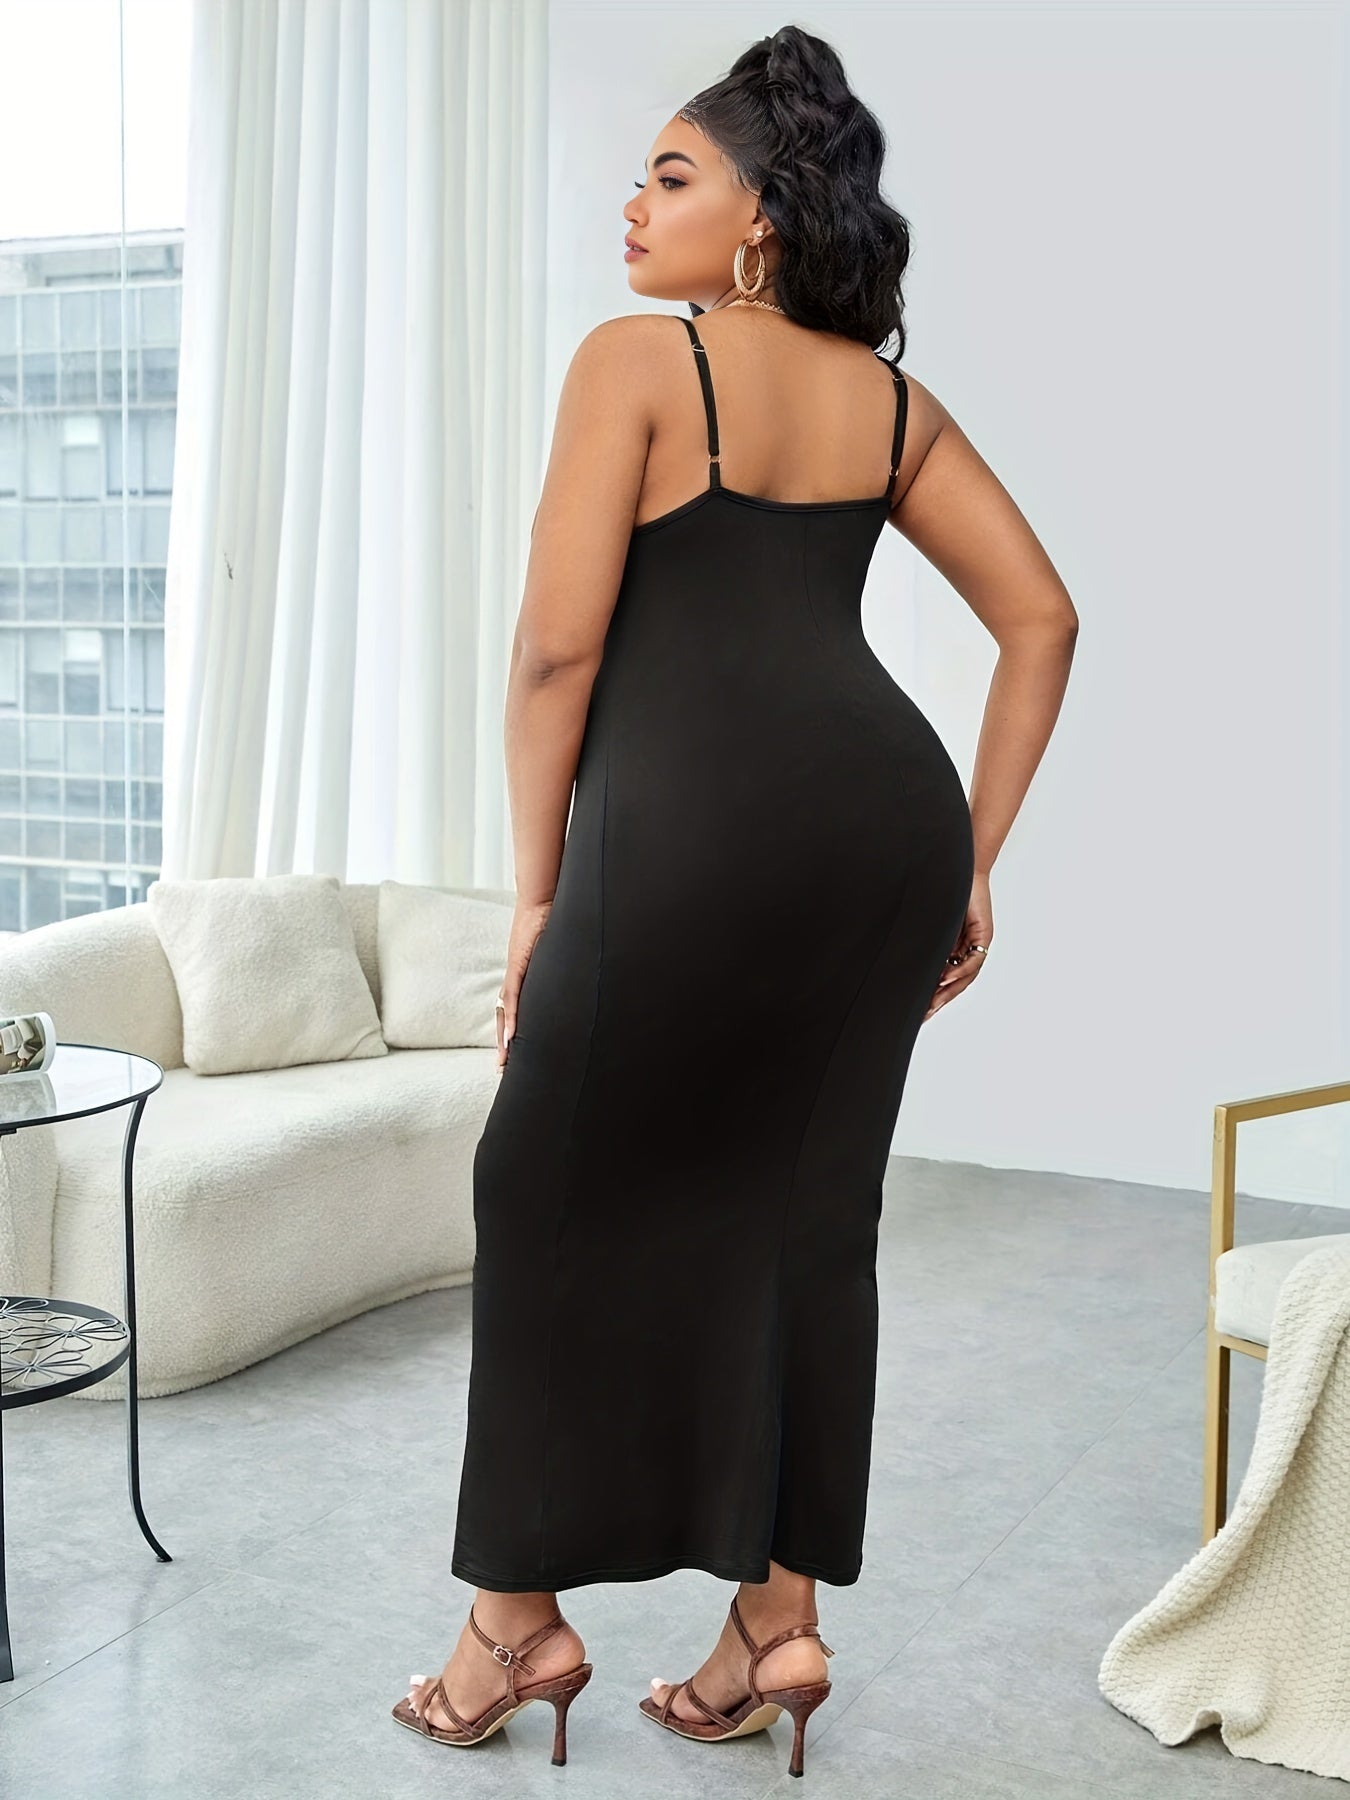 Antmvs Plus Size Sexy Dress, Women's Plus Solid Scoop Neck Medium Stretch Bodycon Maxi Midi Cami Dress